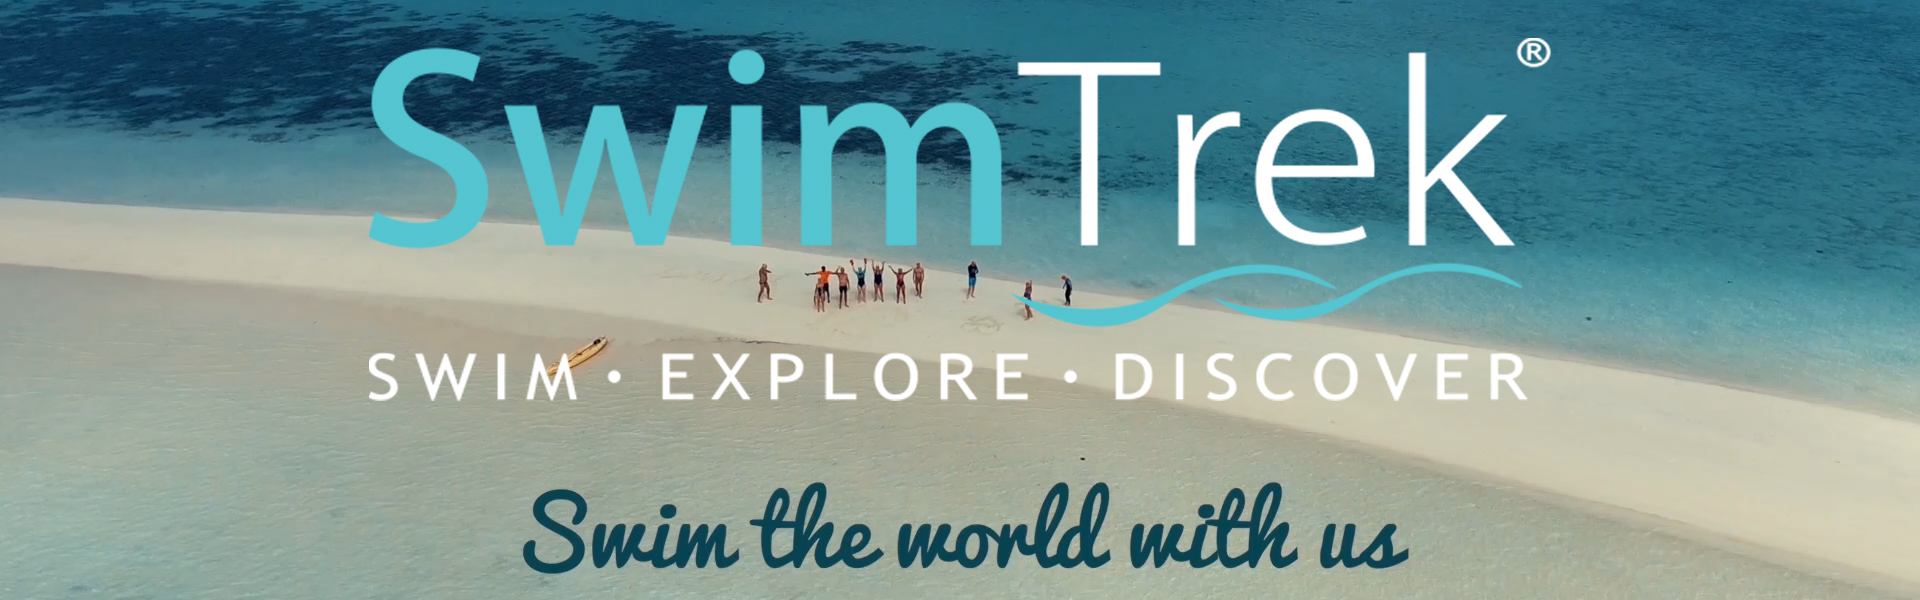 Swim the world with SwimTrek